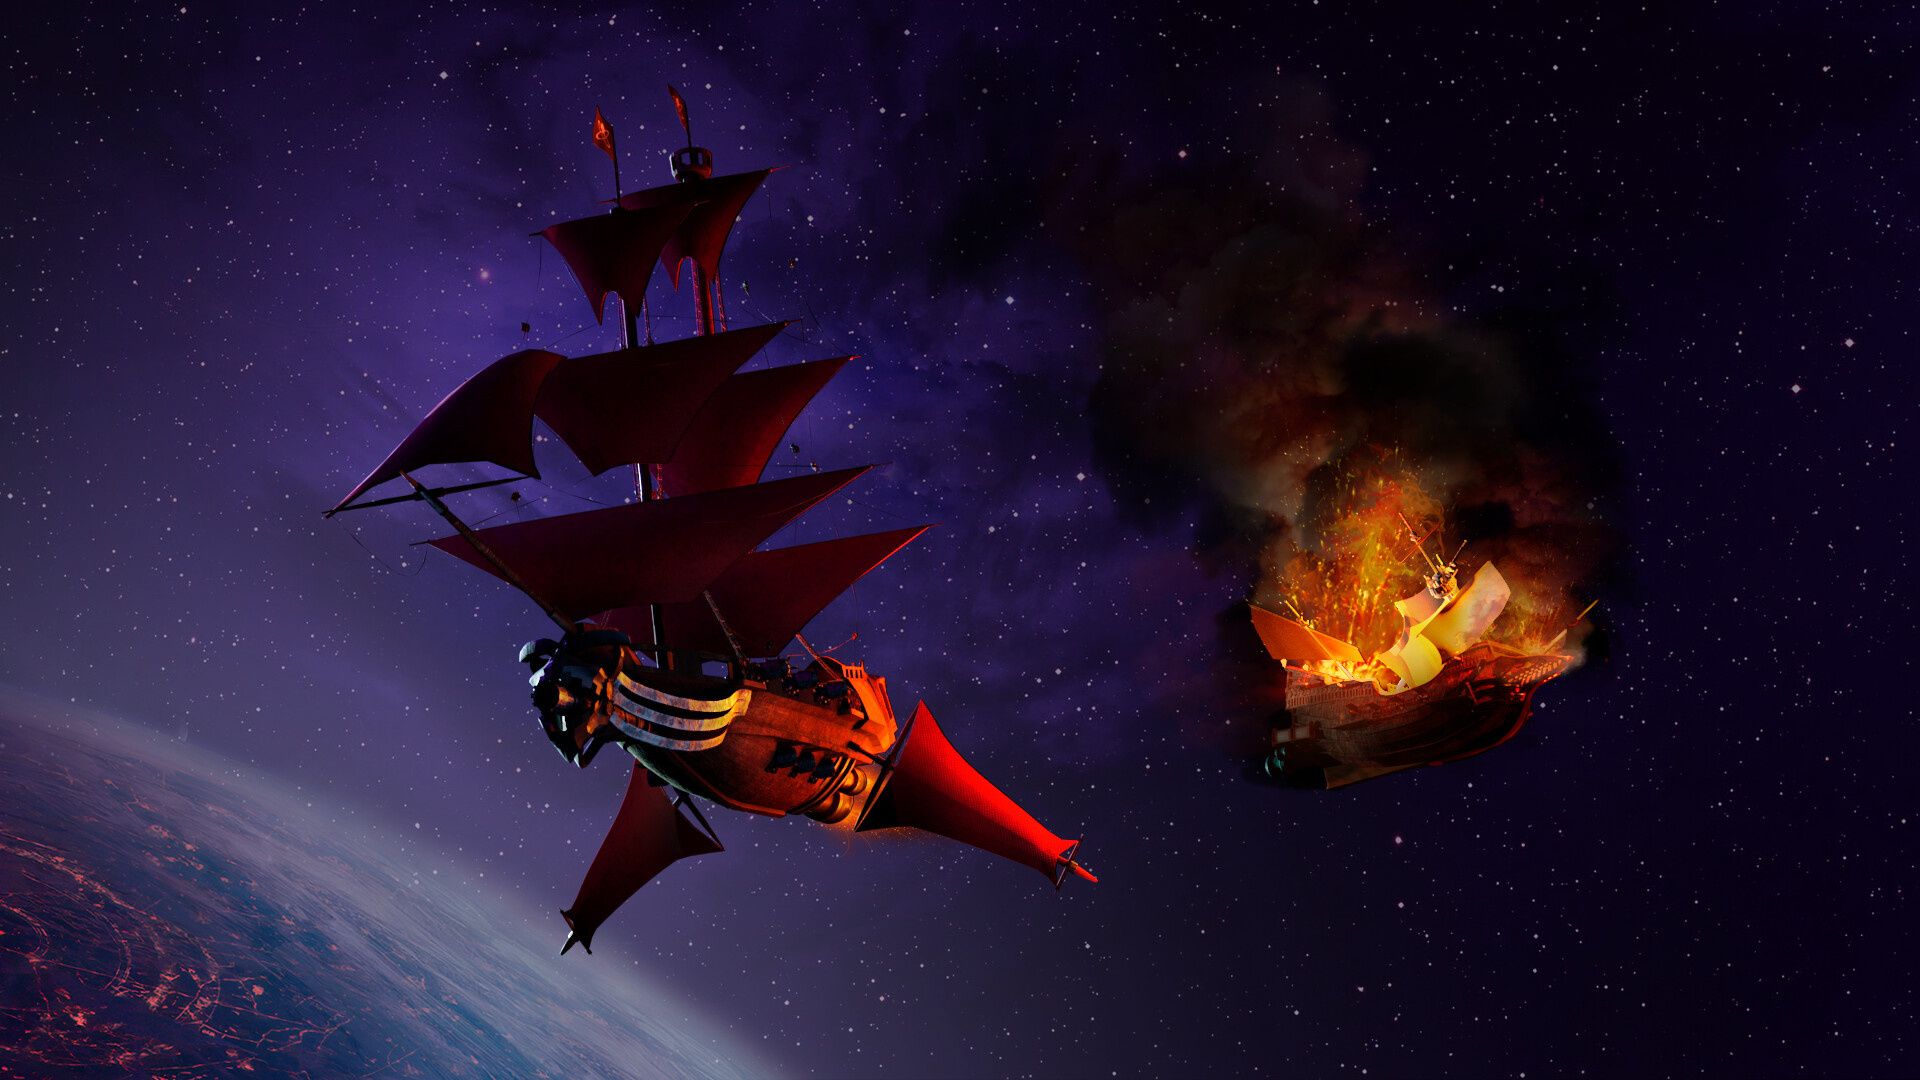 Treasure Planet Animation, Artistic portrayal, Spaceship design, Epic cosmic journey, 1920x1080 Full HD Desktop